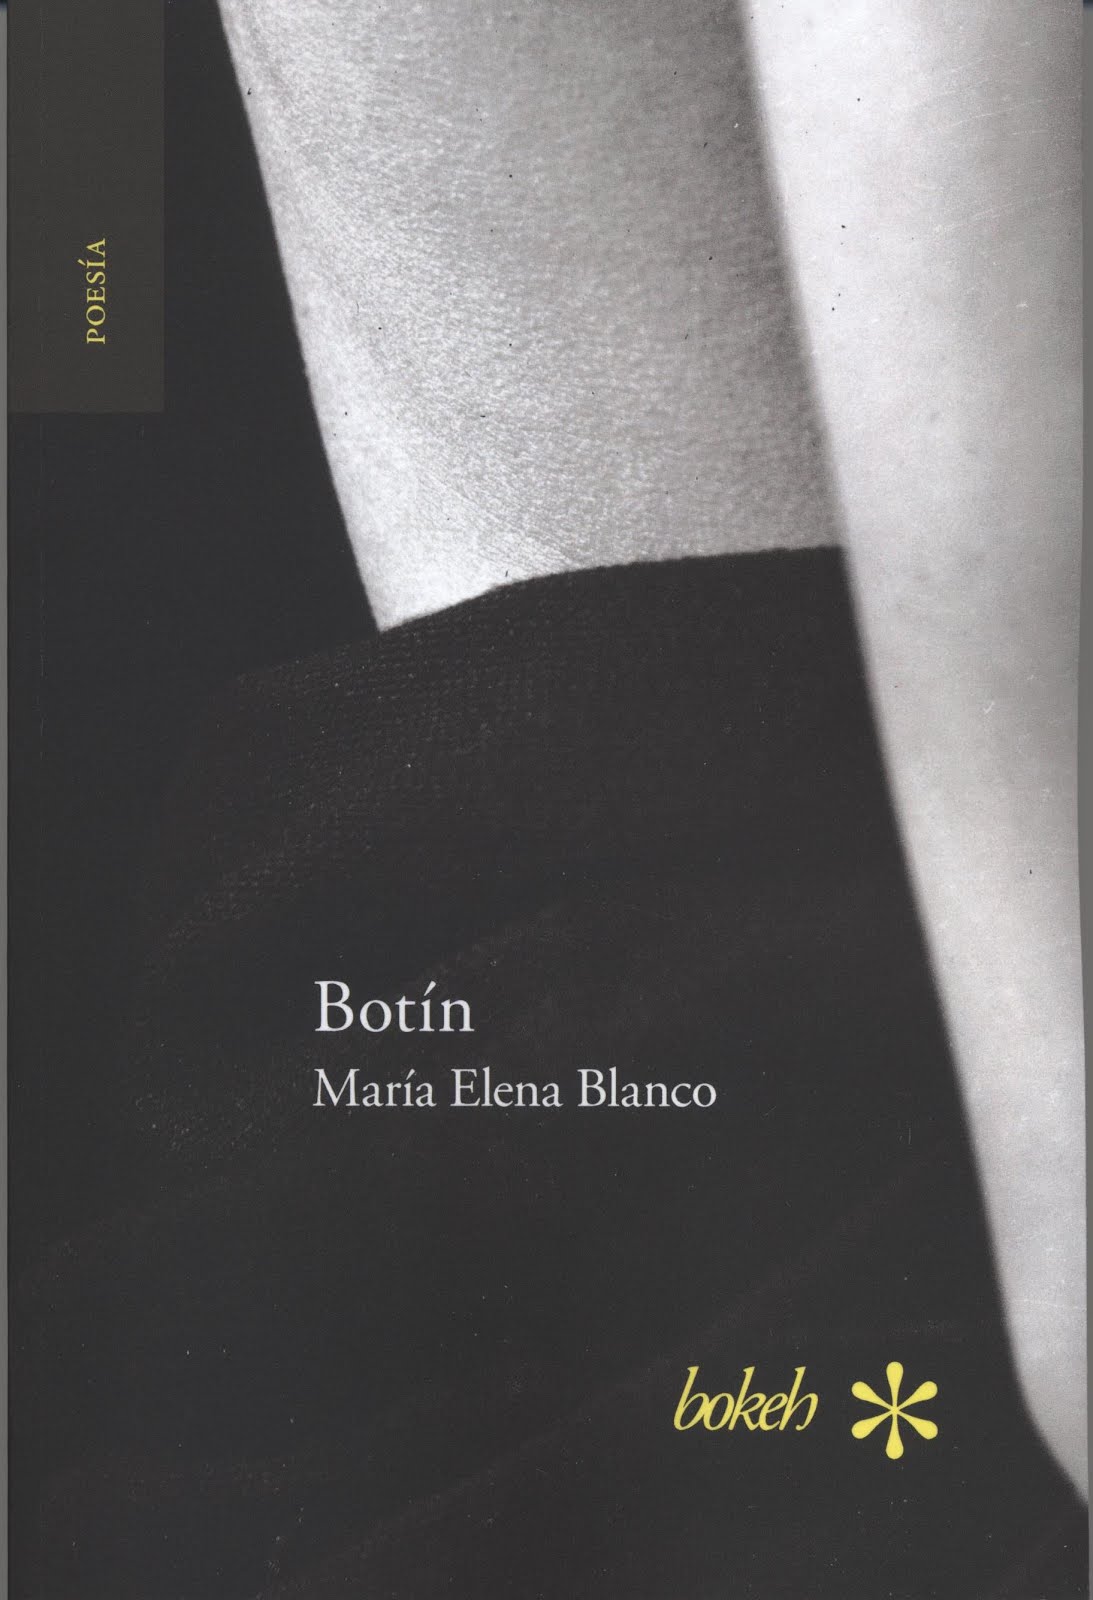 Botín. Antología personal 1986-2016 (Bokeh Press, Leiden, Países Bajos, 2016)